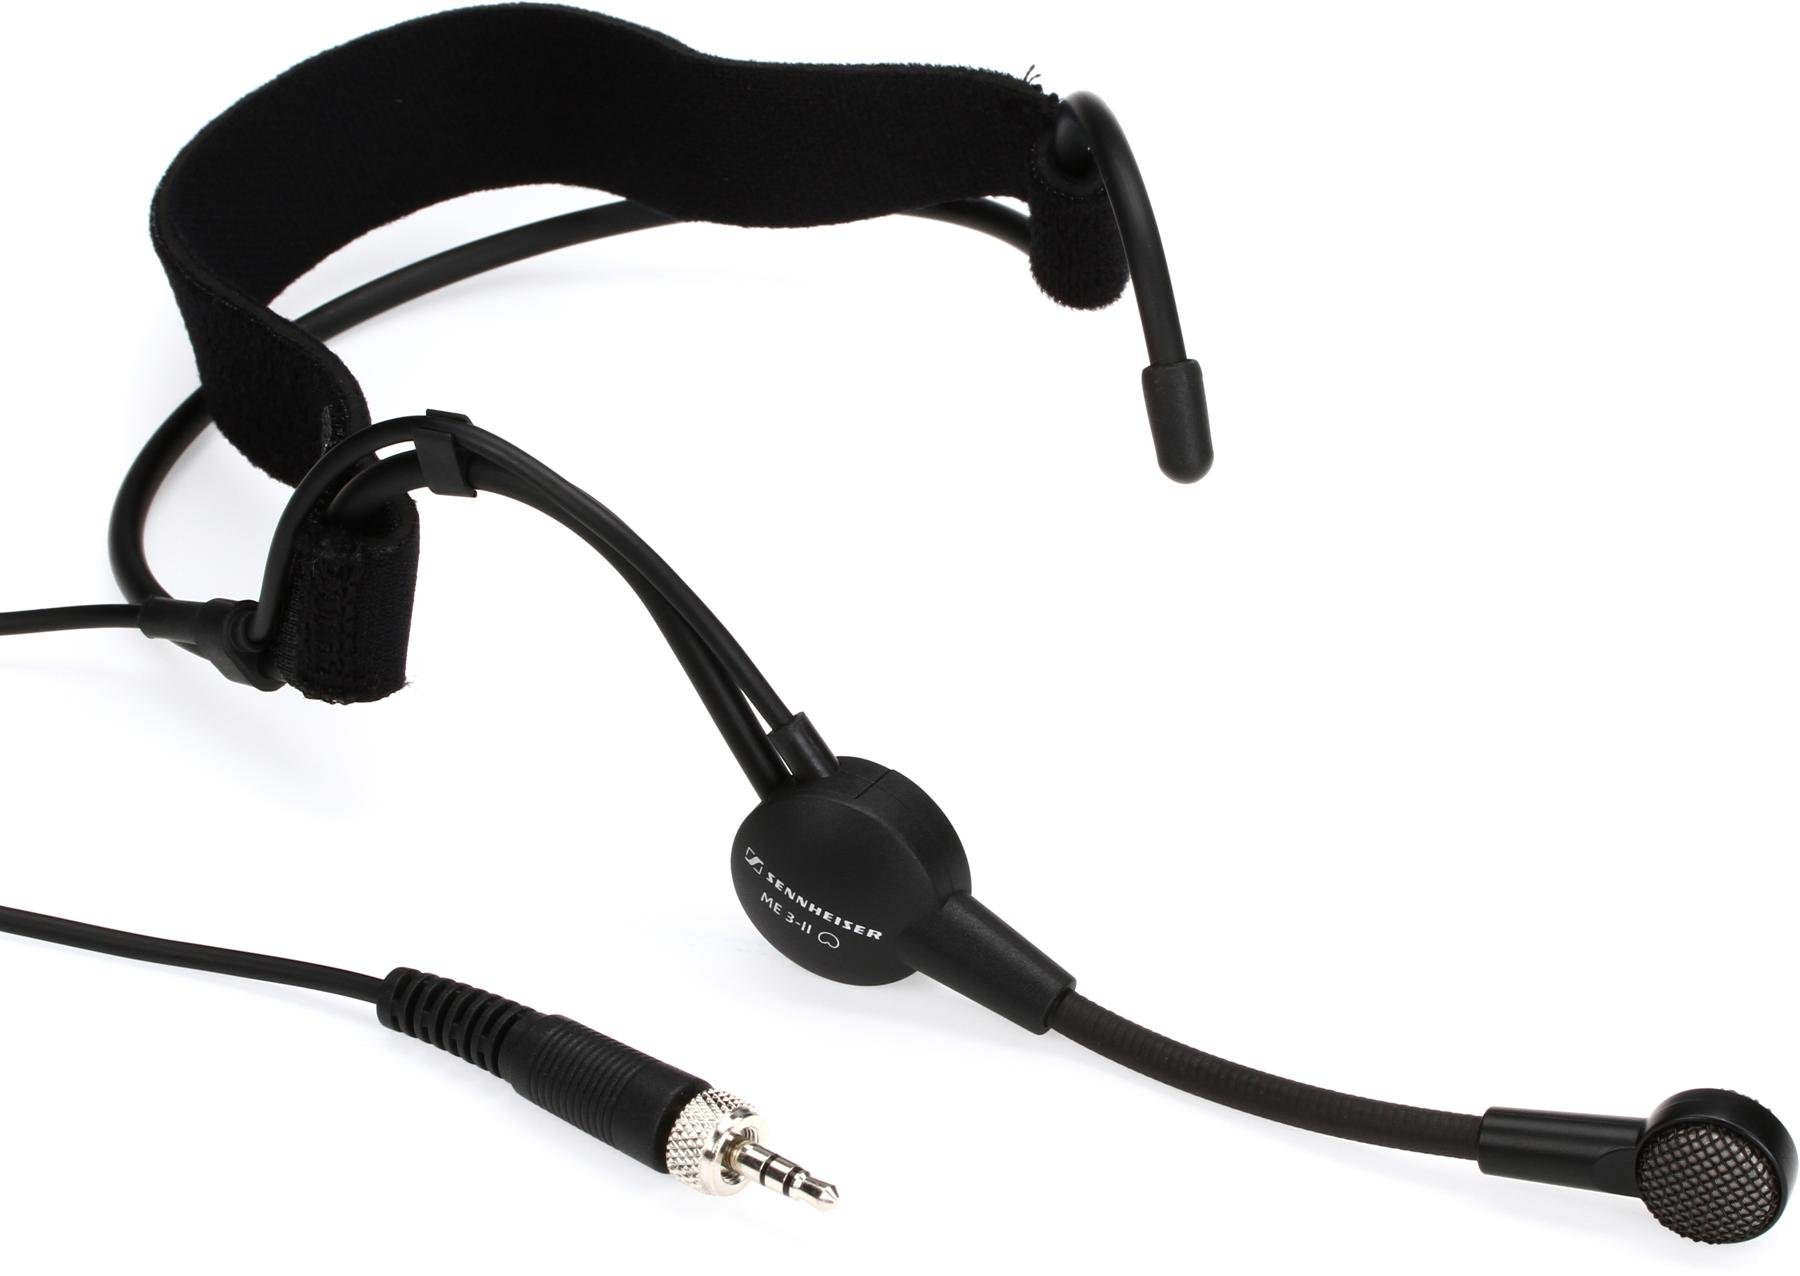 Sennheiser ME 3-II Headset Microphone for Sennheiser Wireless 